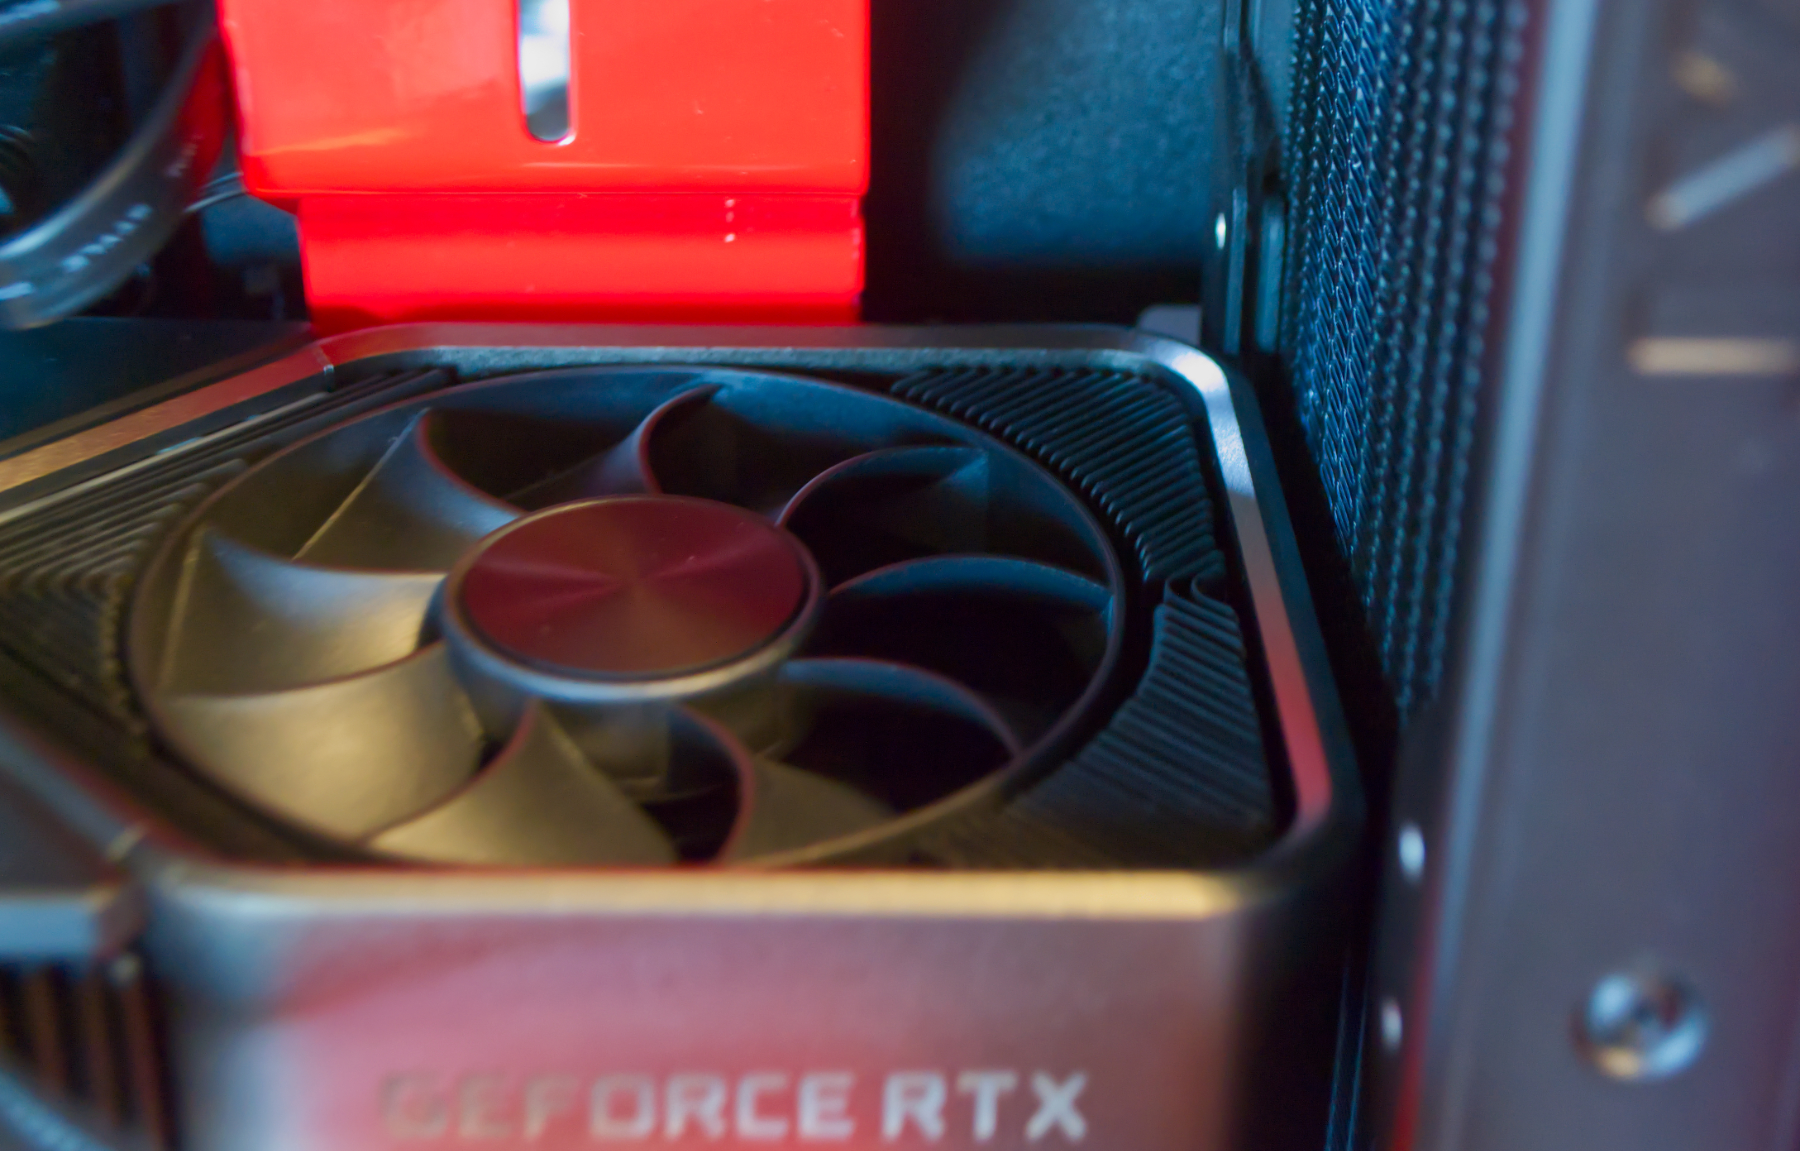 GeForce RTX card touching the AIO radiator